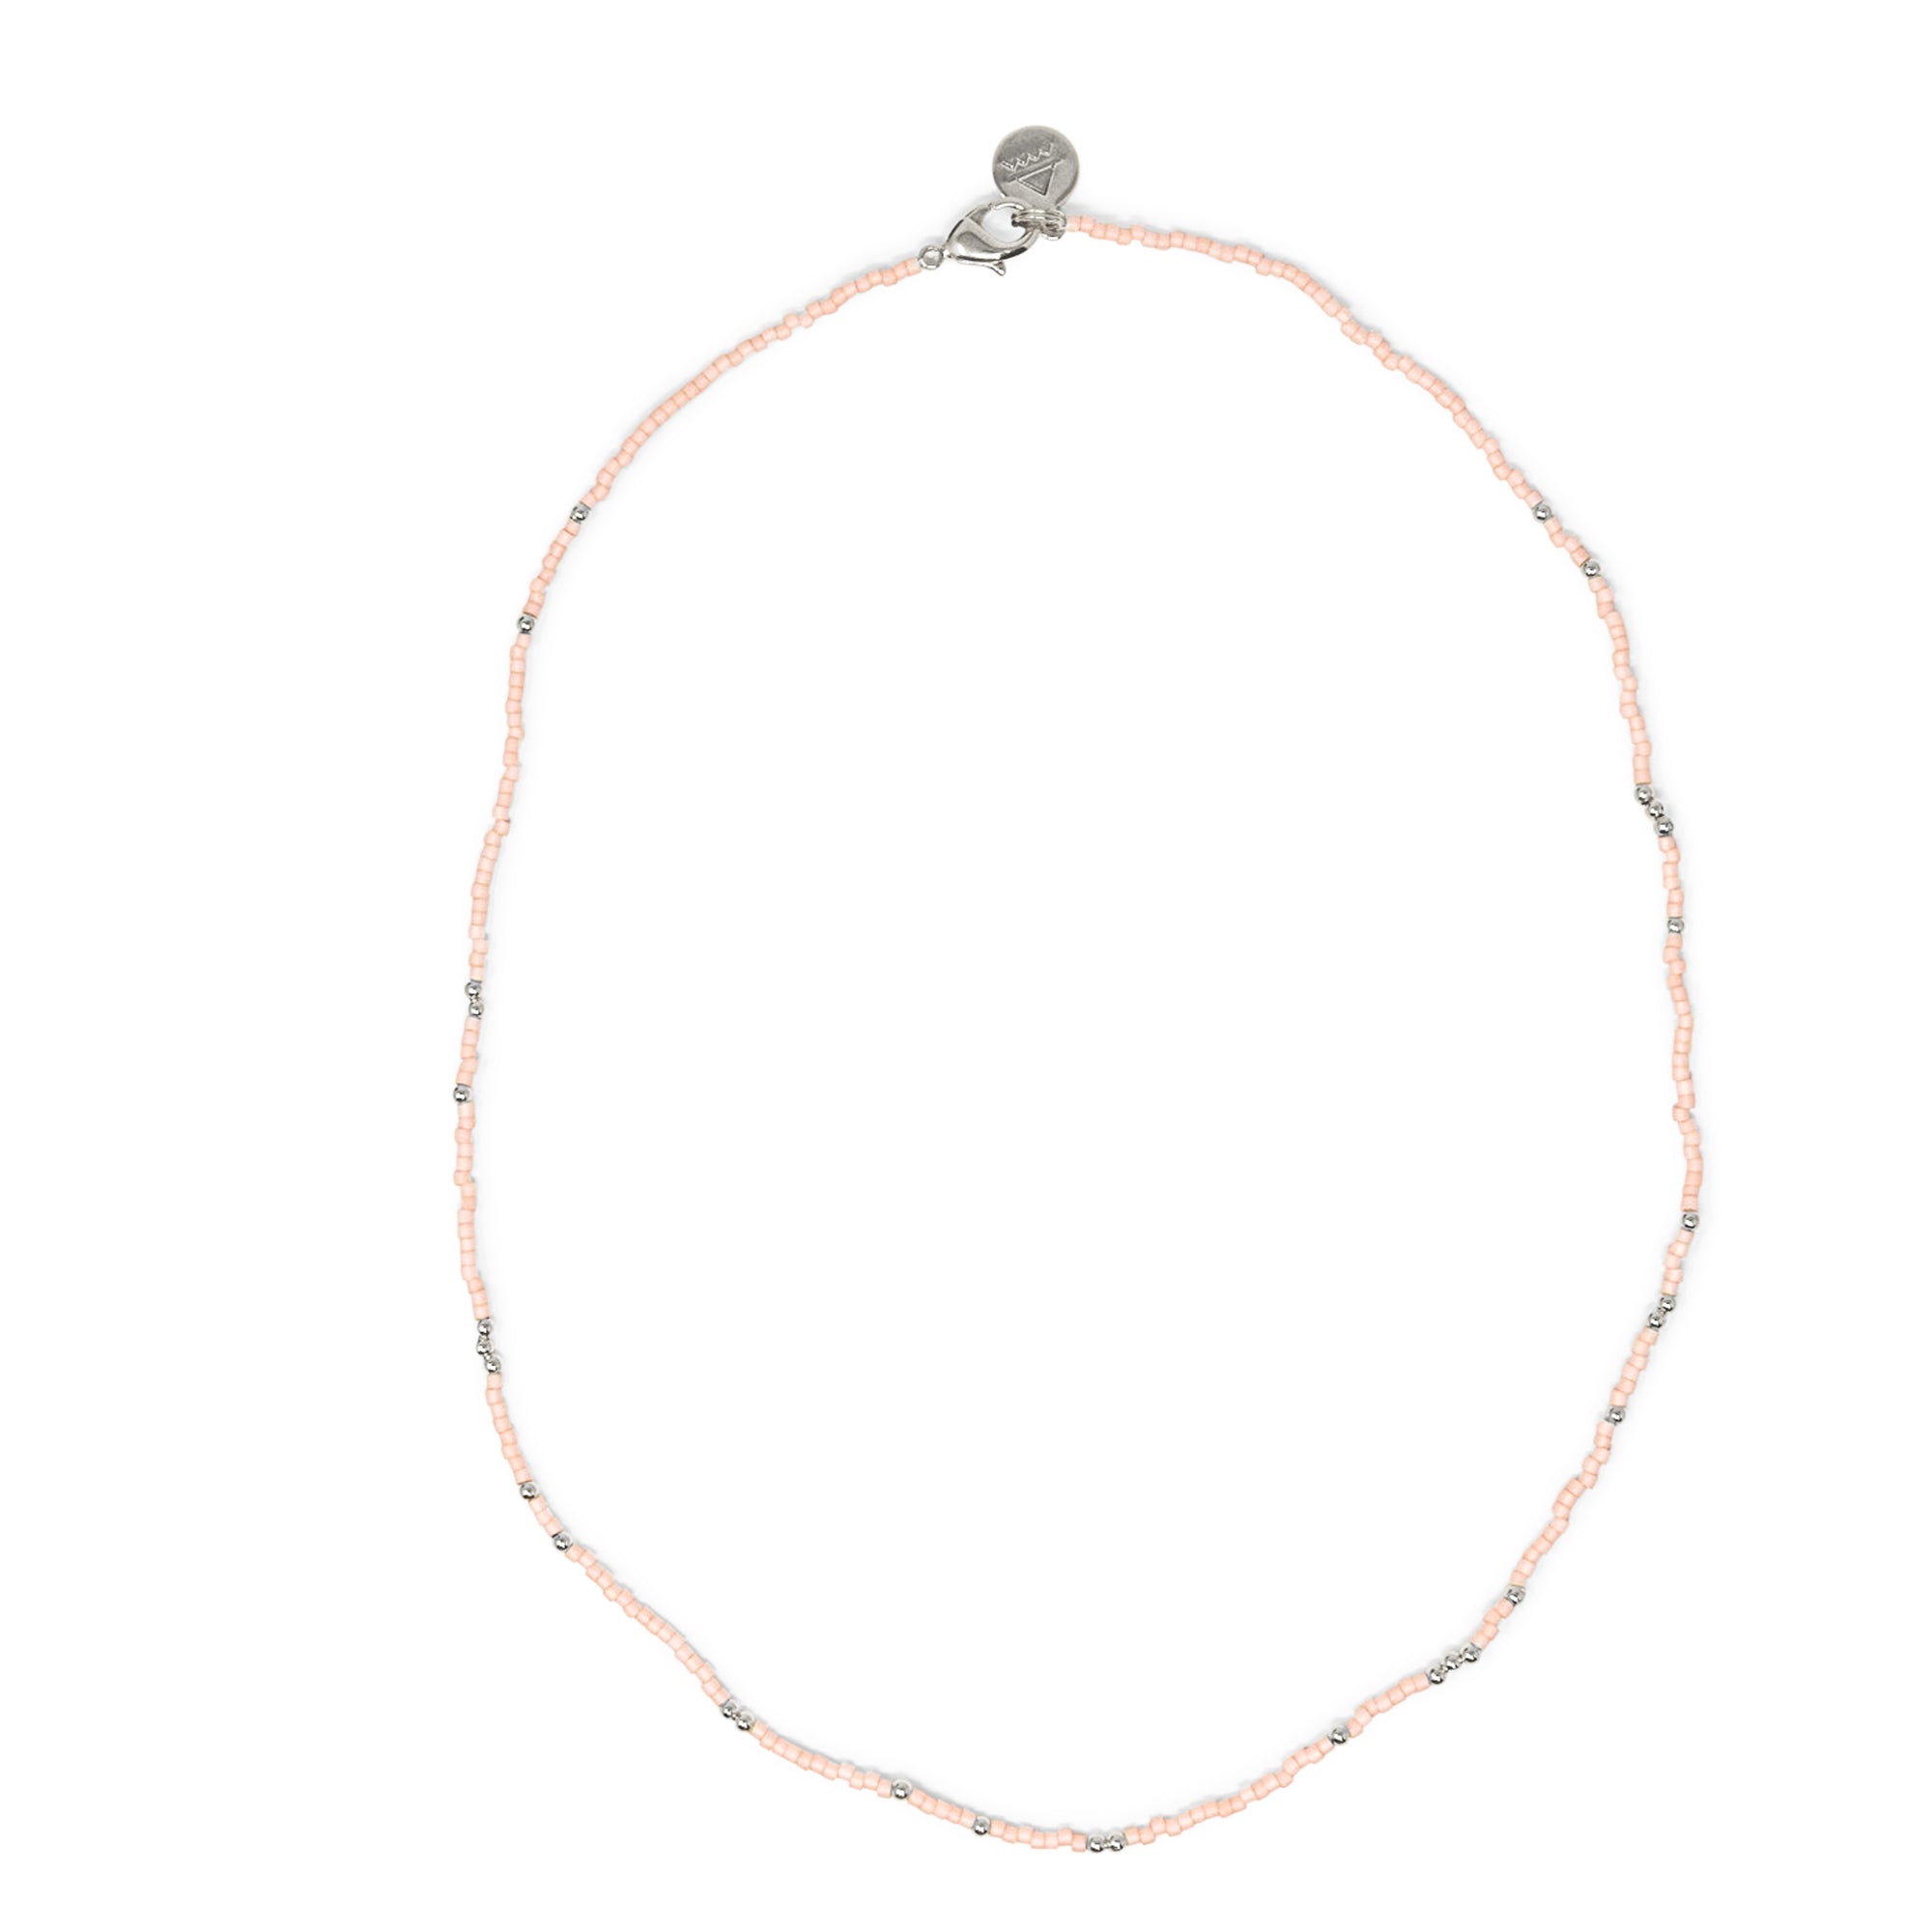 Coral & Silver Bead Necklace